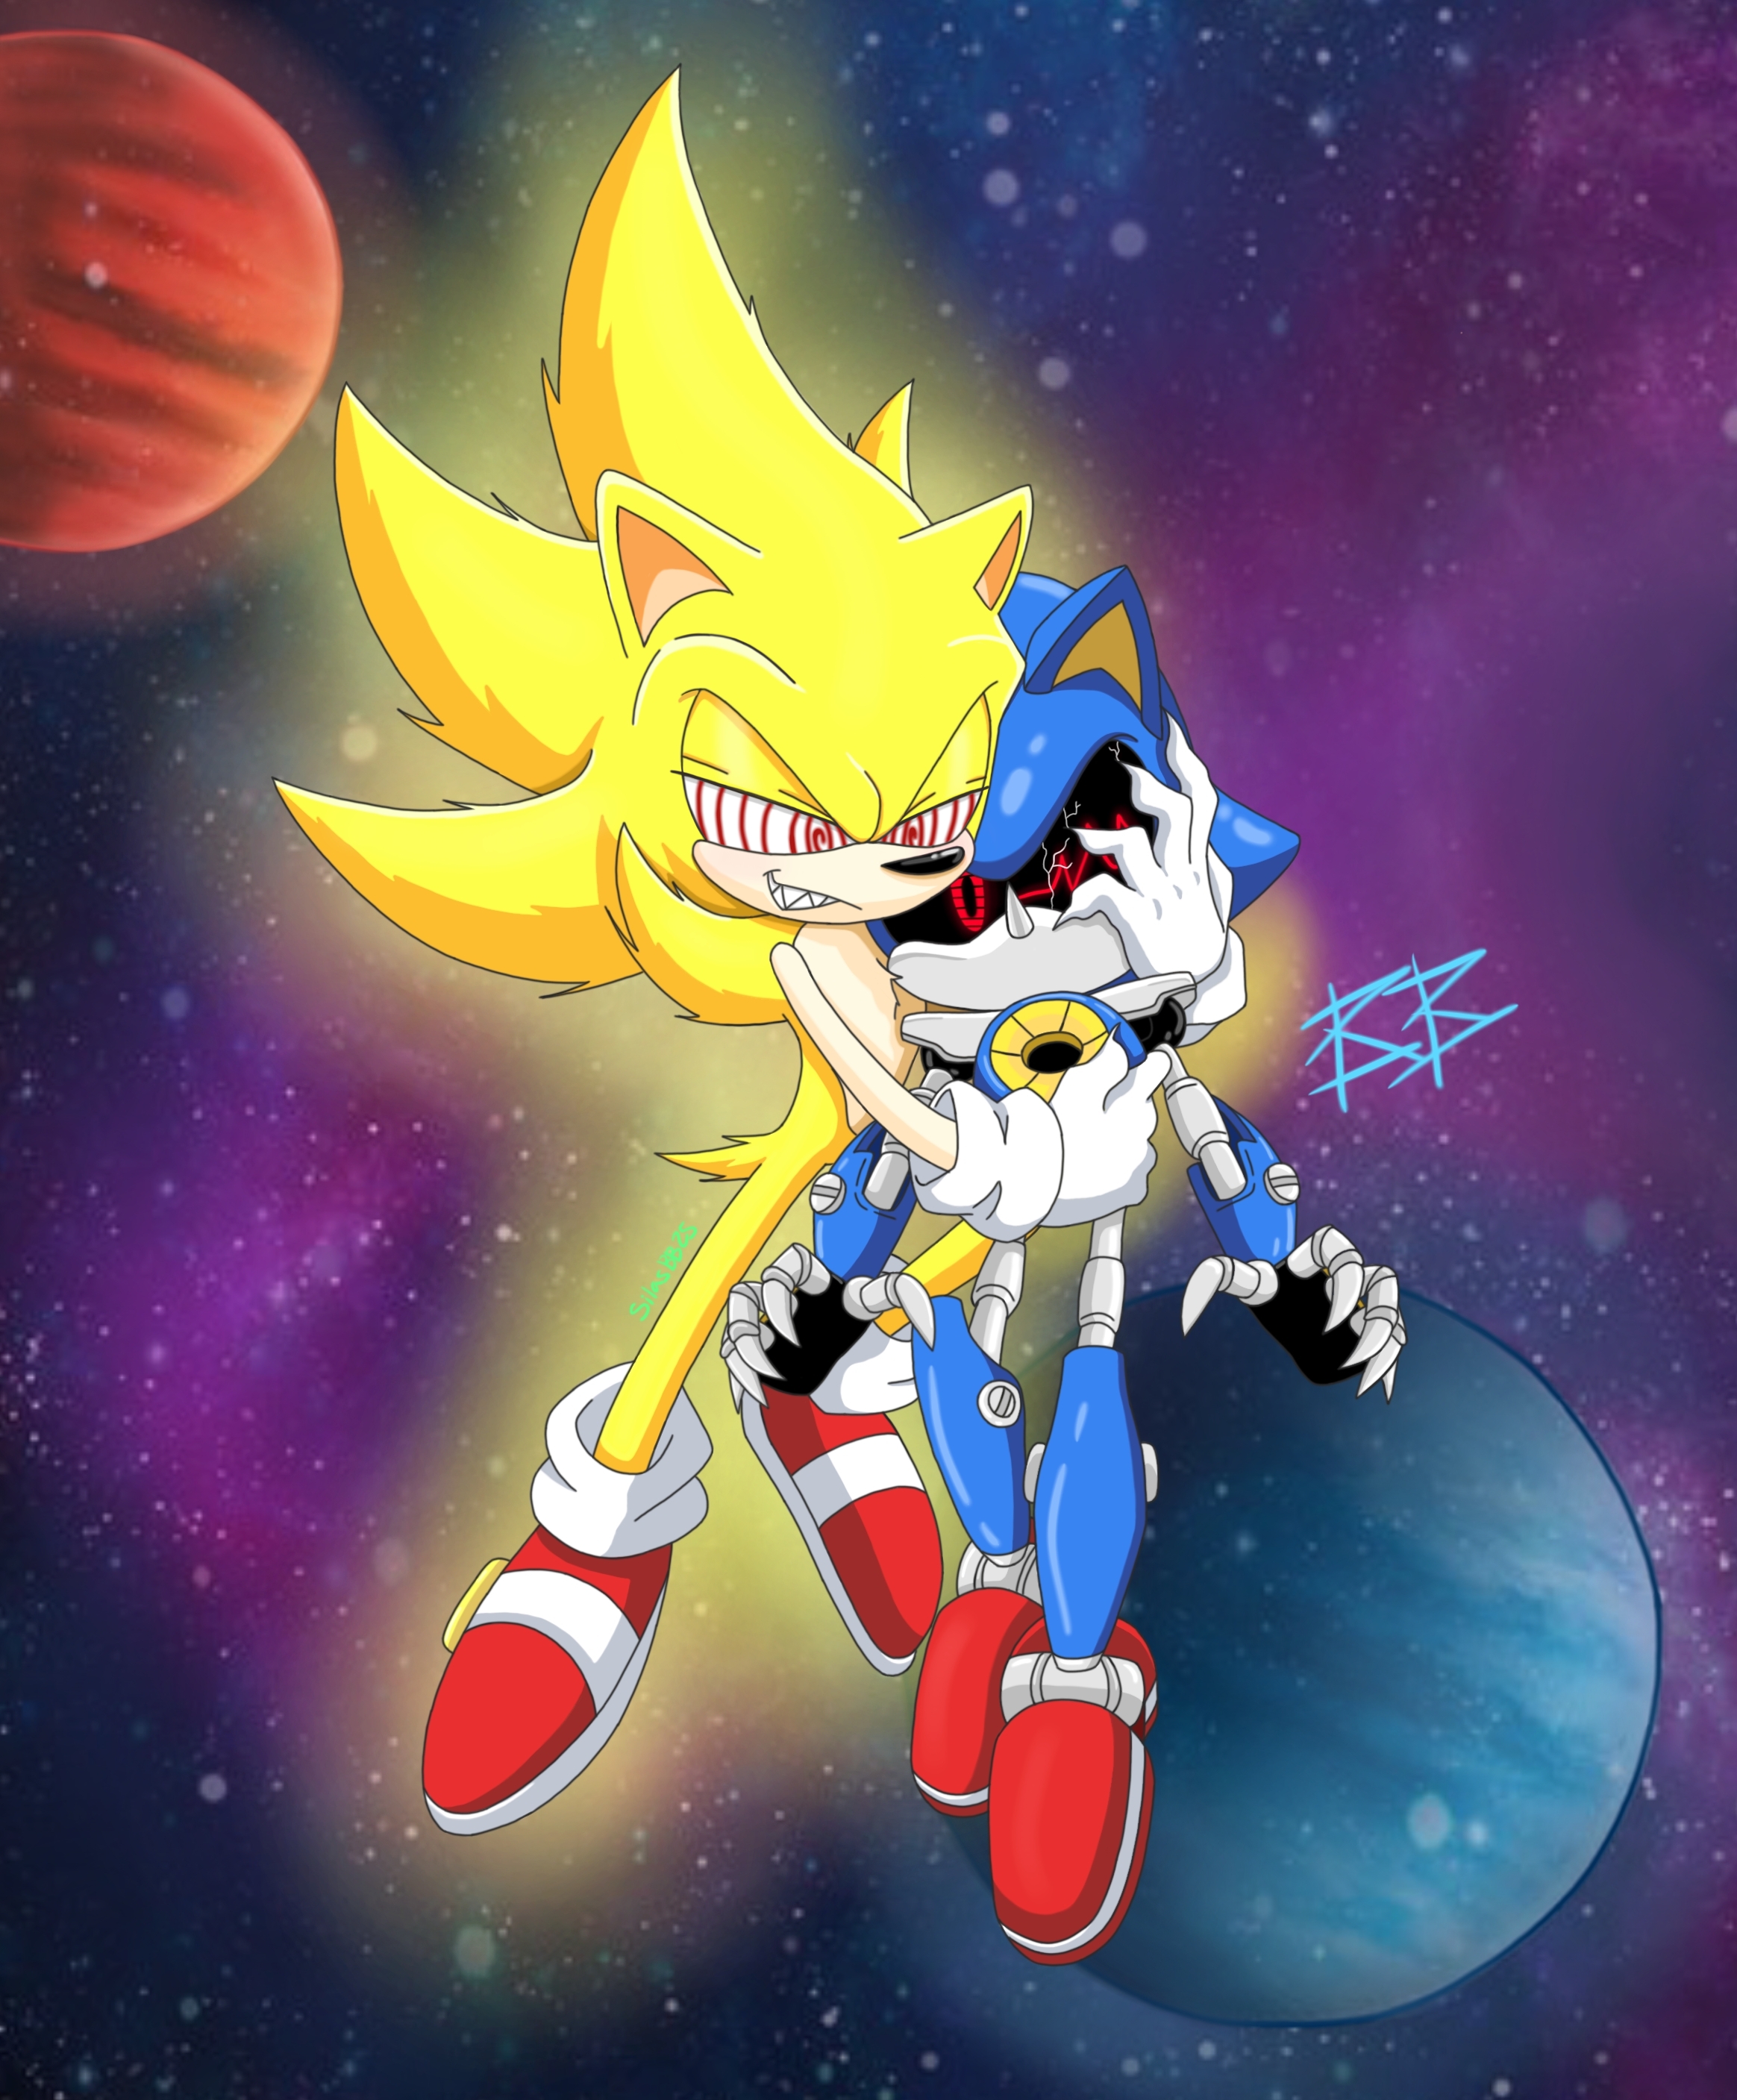 Sonic.EXE vs Fleetway Super Sonic (by James M) by cvgwjames on DeviantArt